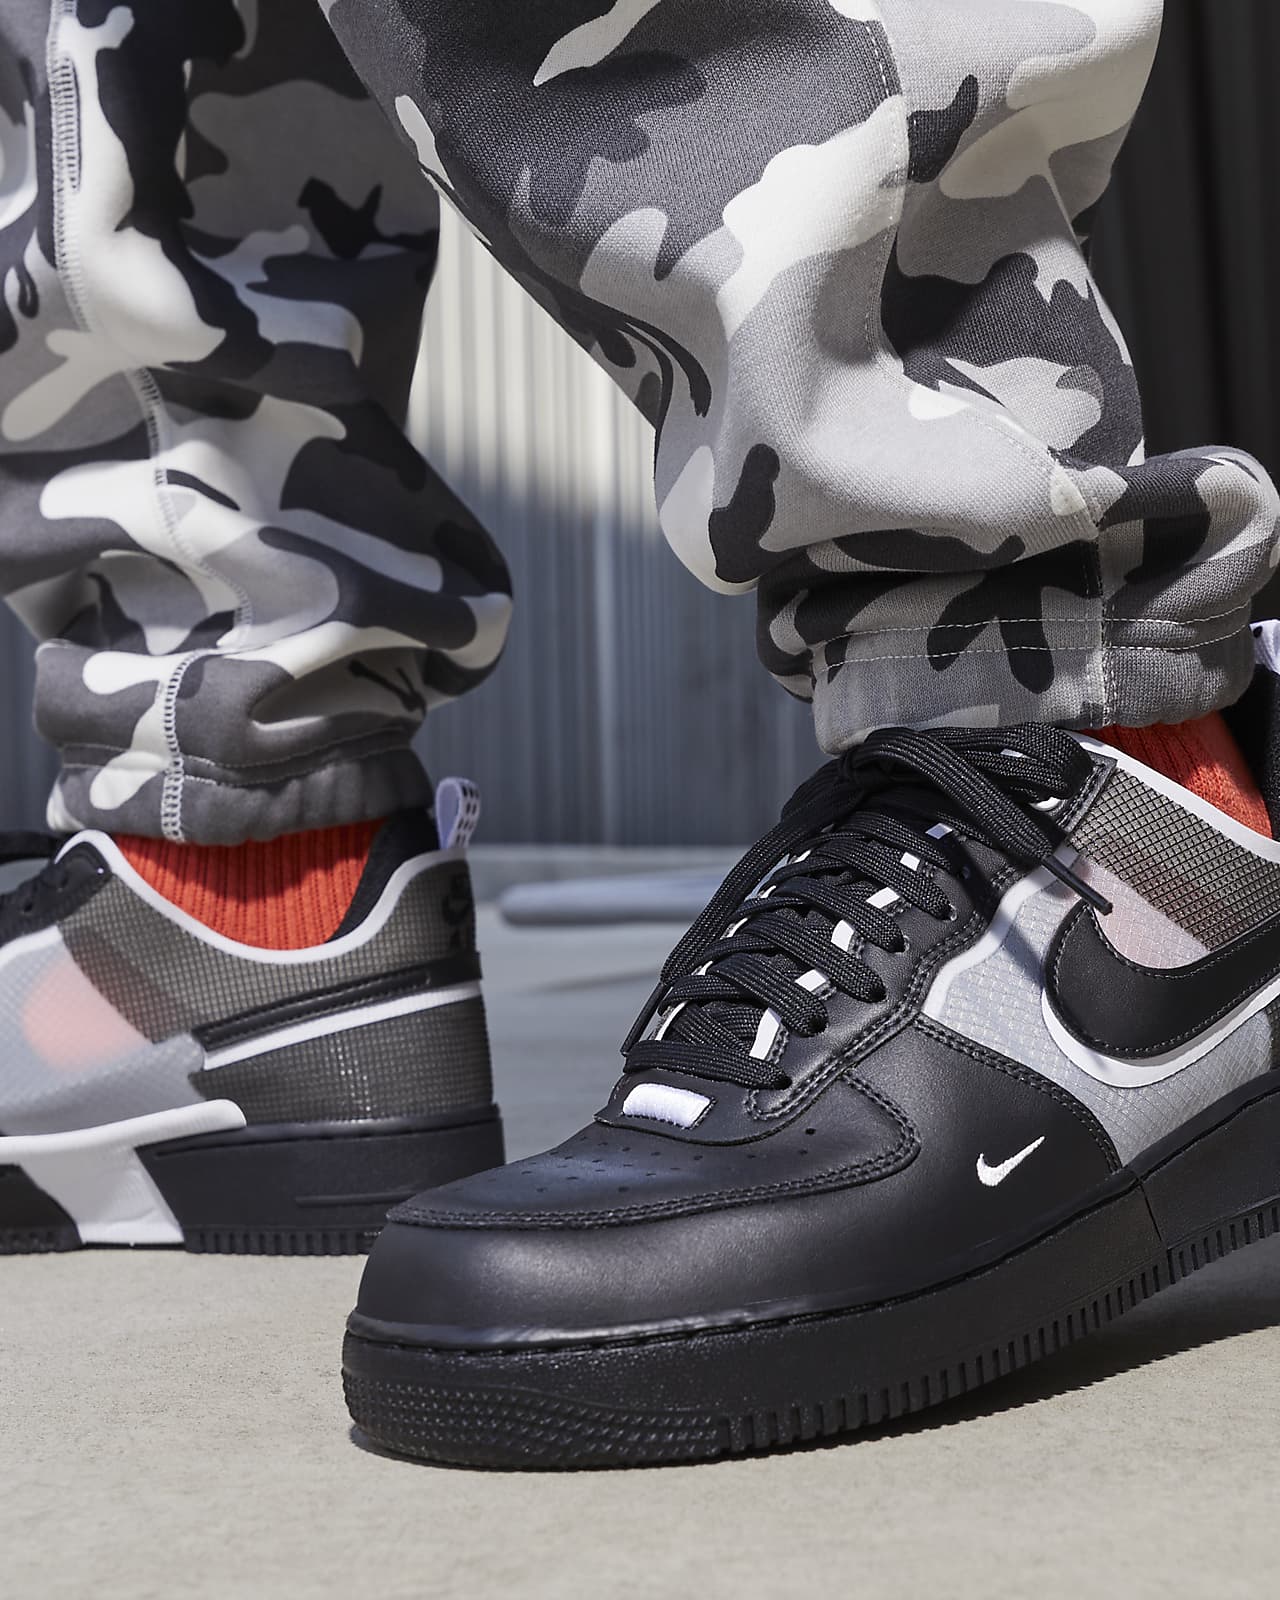 Air Force 1 Shoes. Nike PH